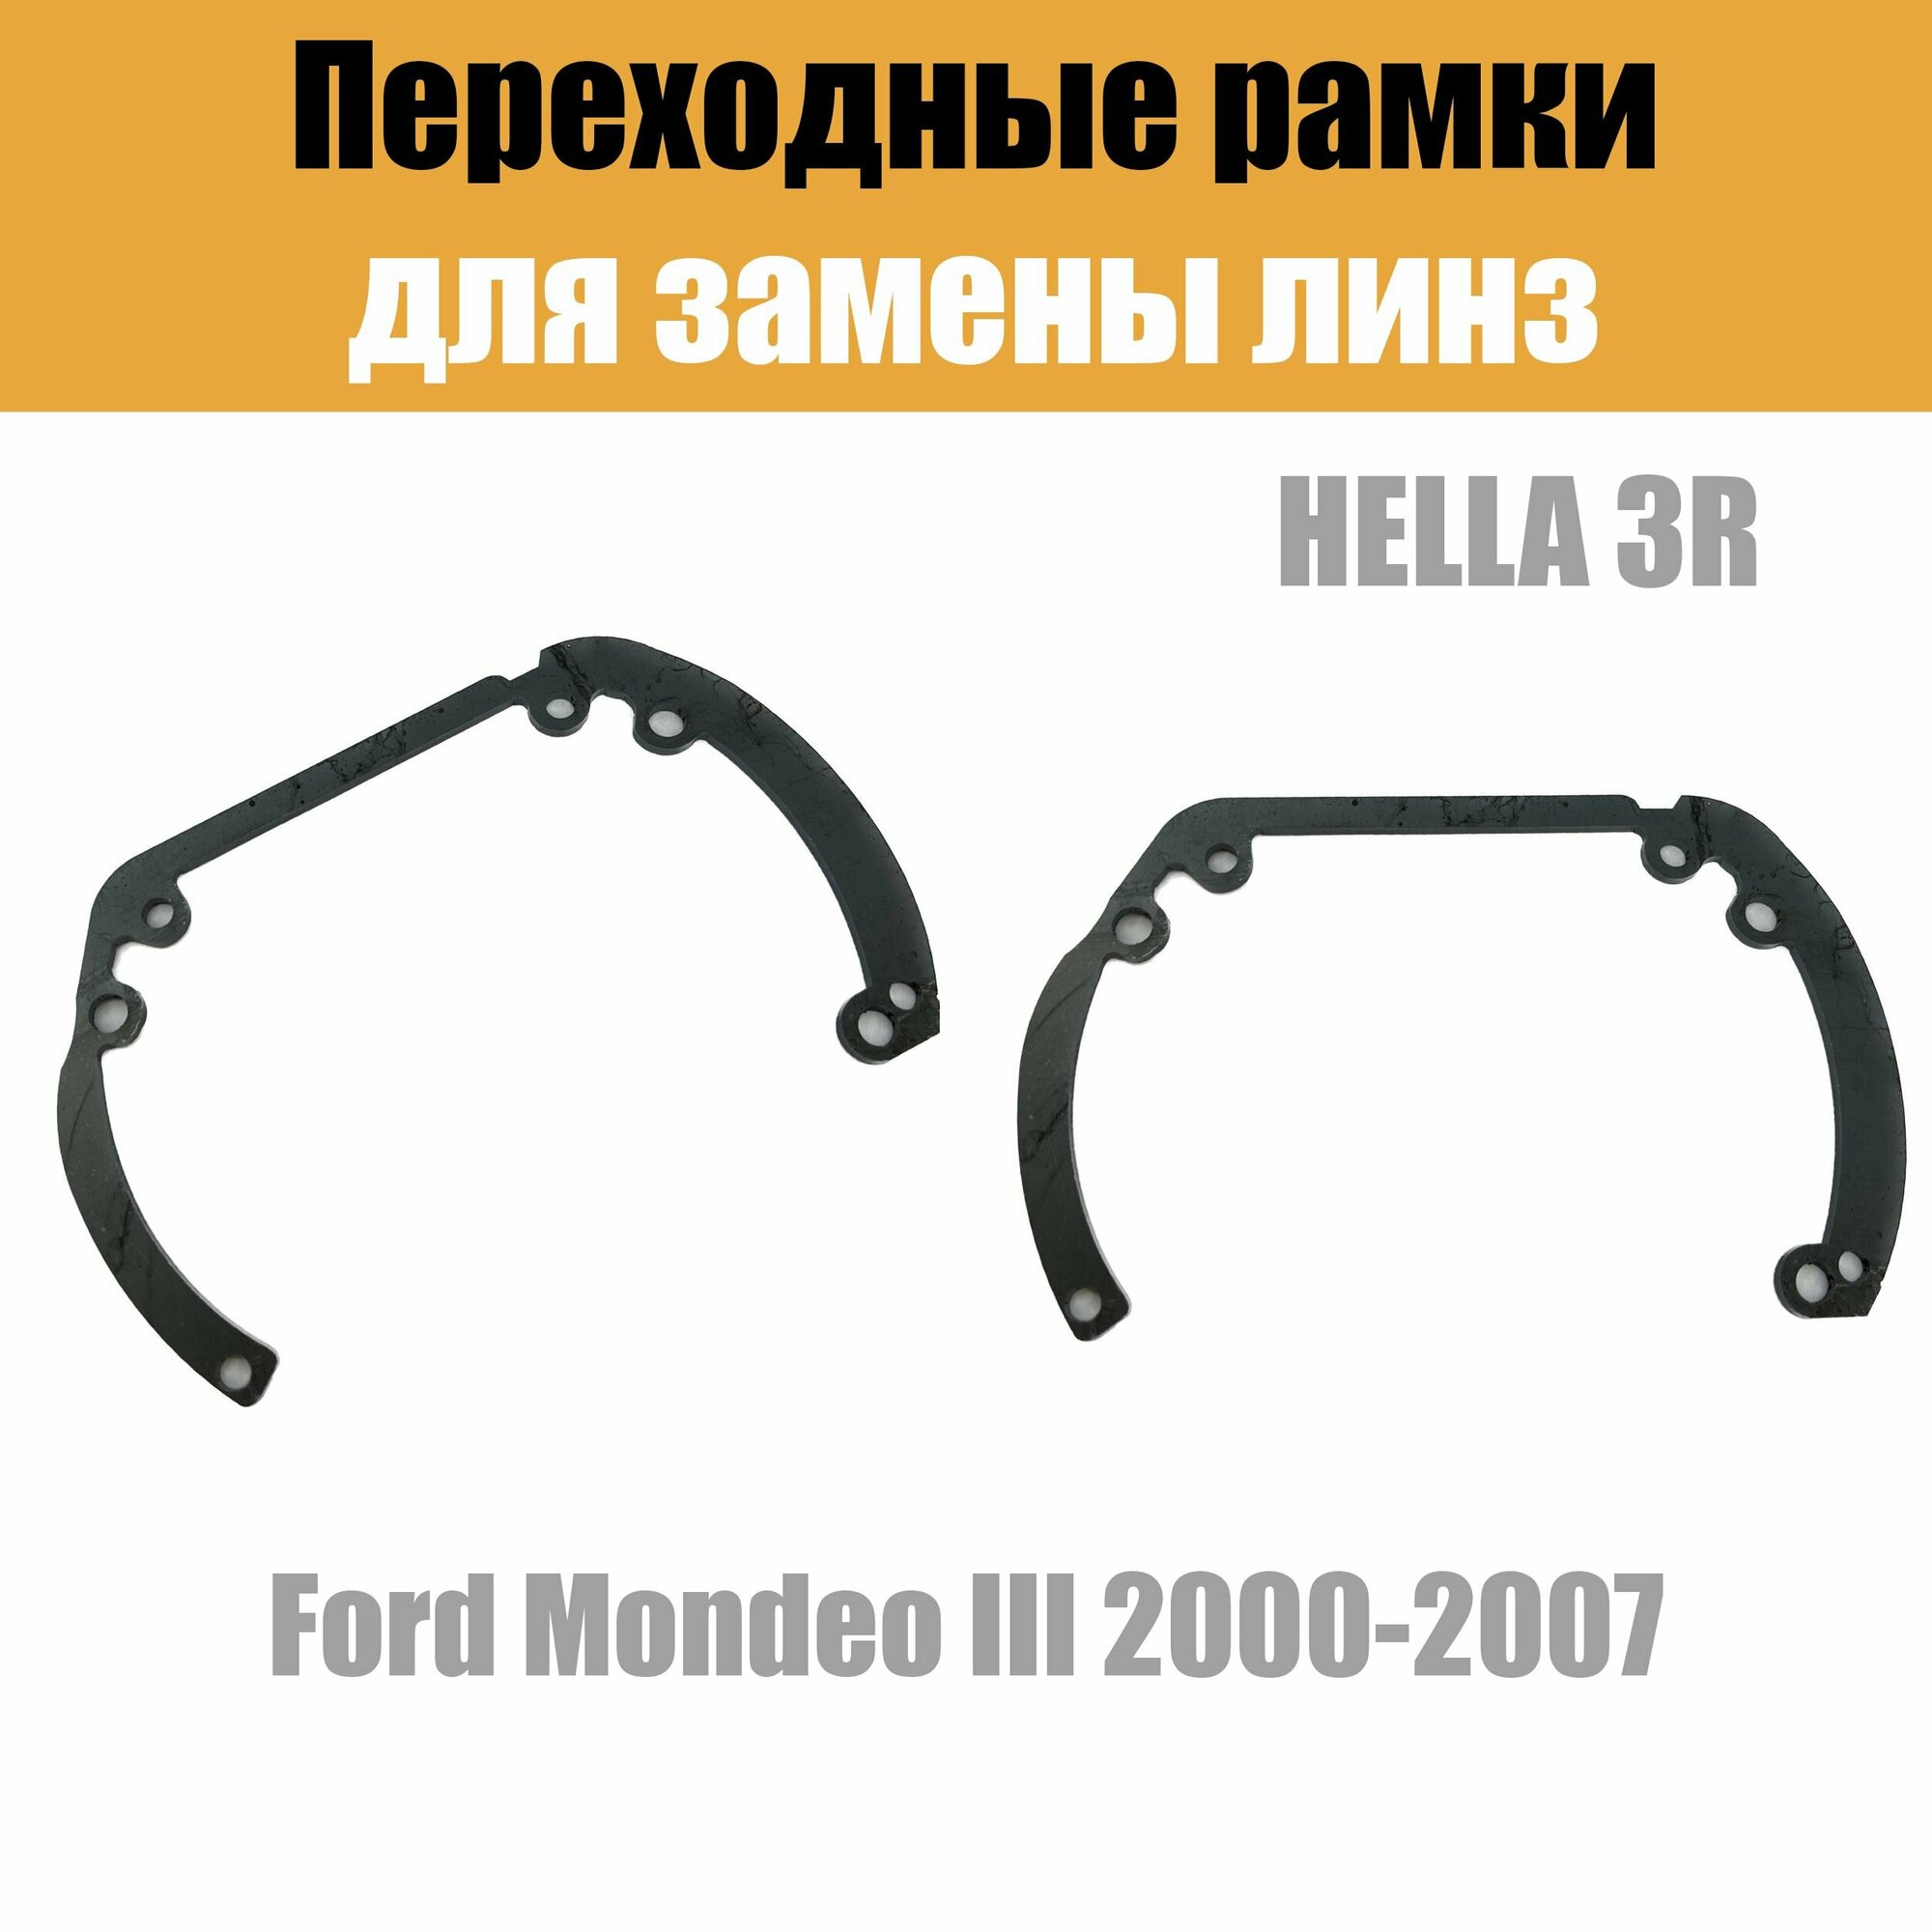 Переходные рамки для линз №6 на Ford Mondeo III (2000-2007) под модуль Hella 3R/Hella 3 (Комплект 2шт)